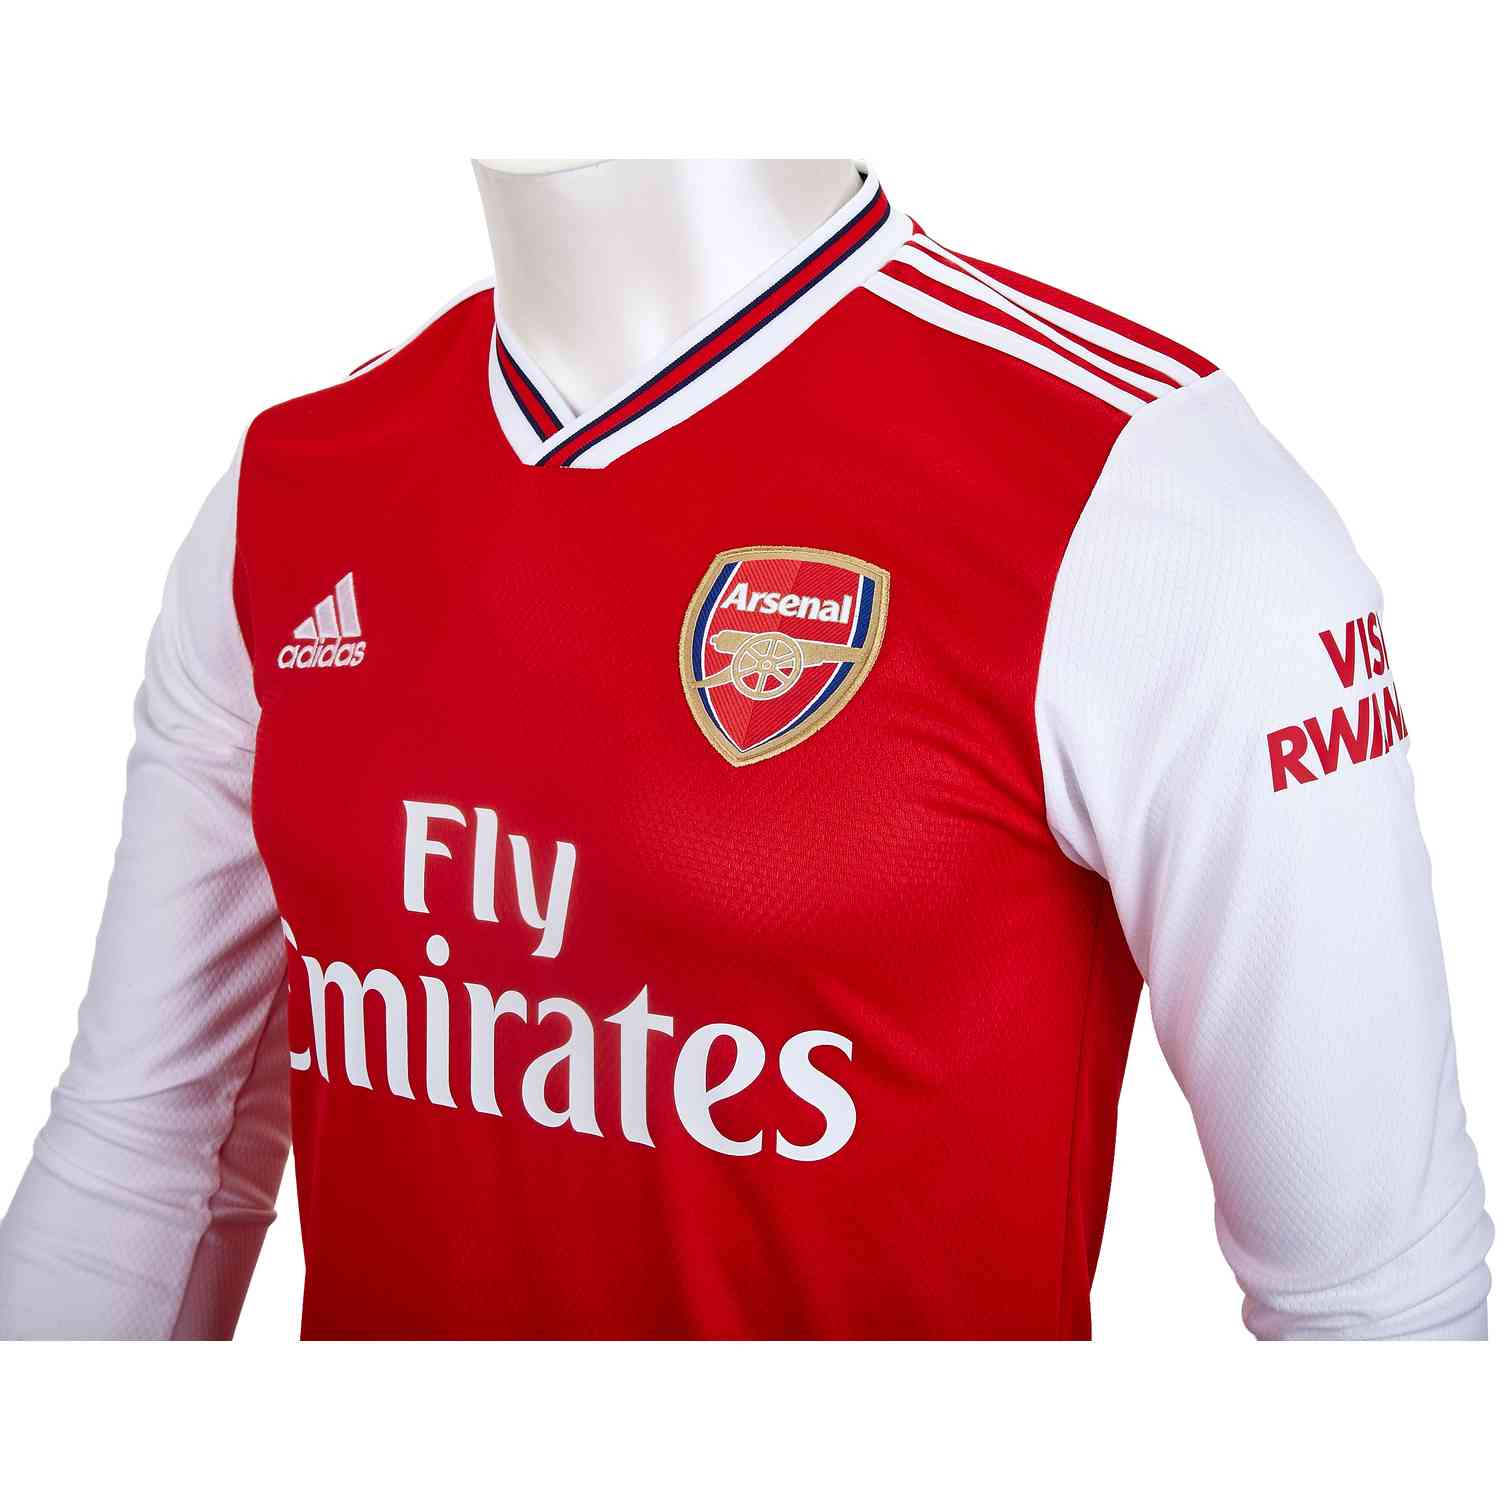 Arsenal New Jersey : 2019/20 adidas Arsenal Home L/S Jersey - SoccerPro : Just arsenal news 